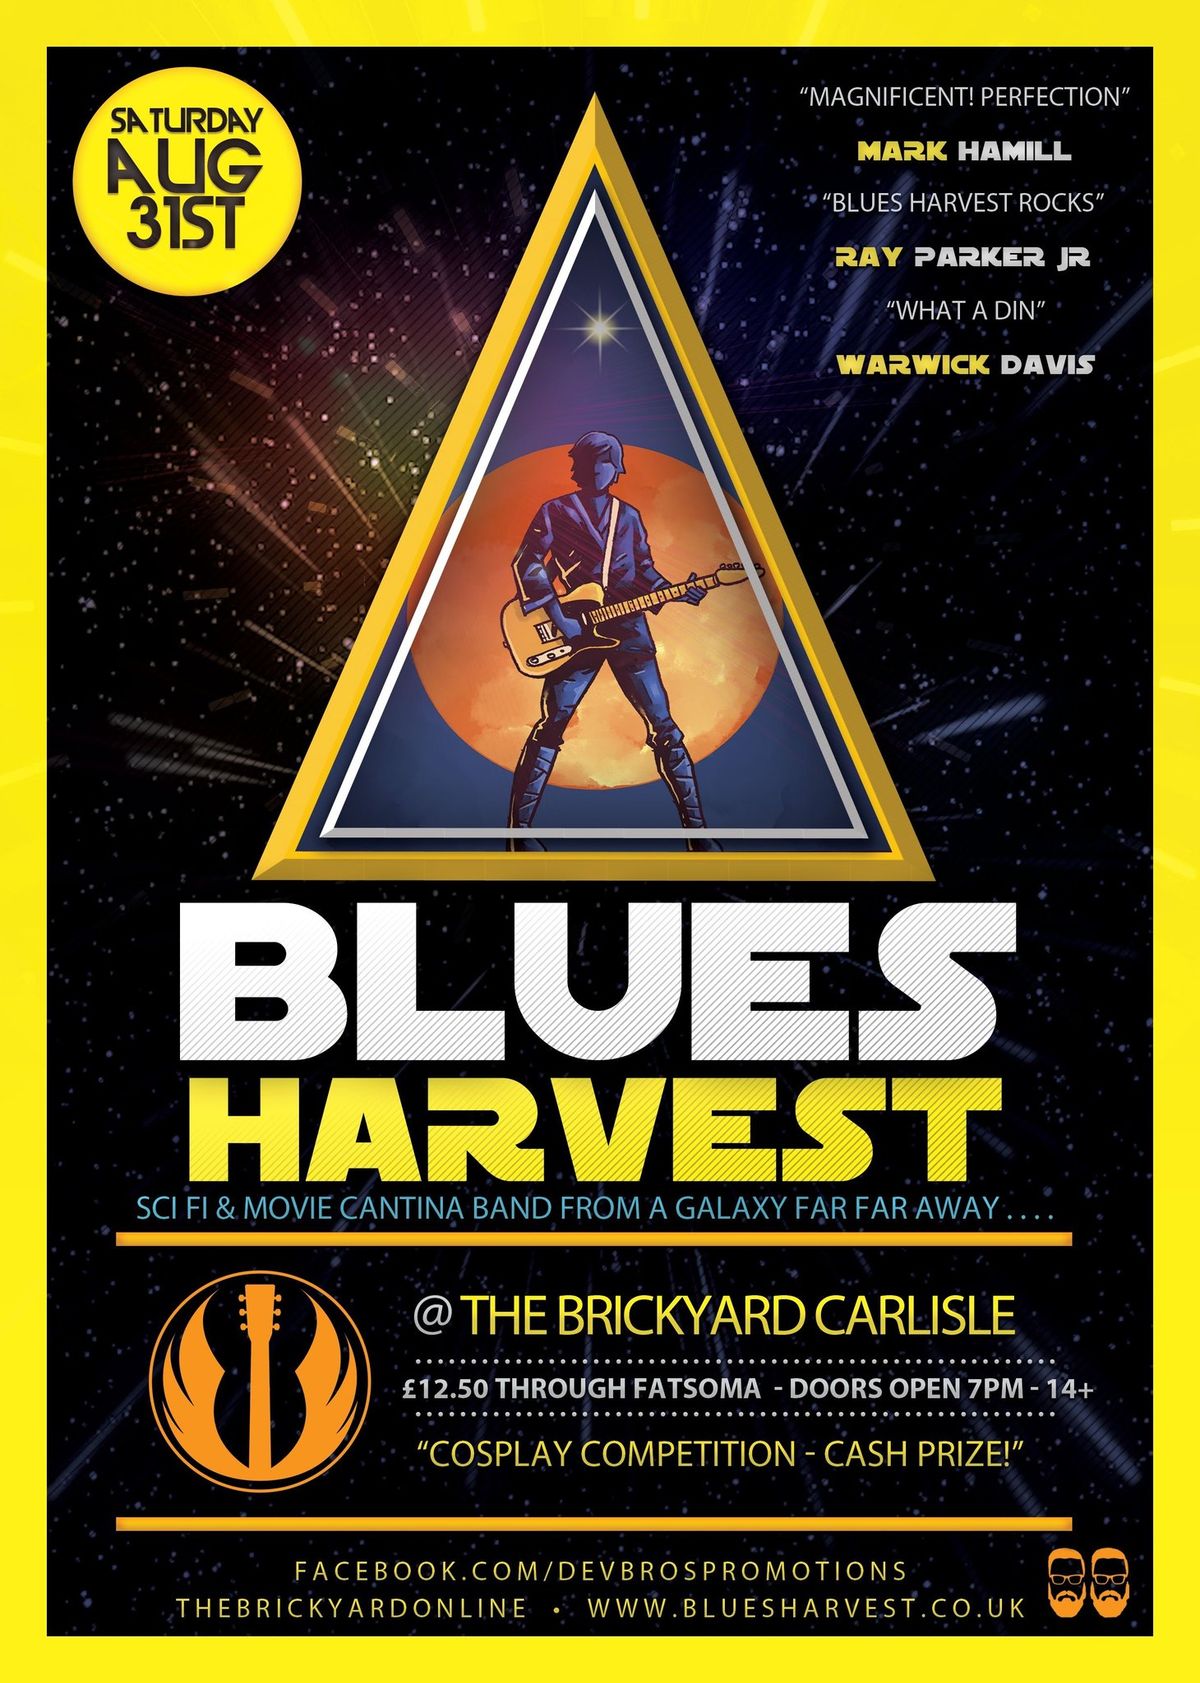 Blues Harvest - Sci-Fi & Movie Cantina Band at The Brickyard!